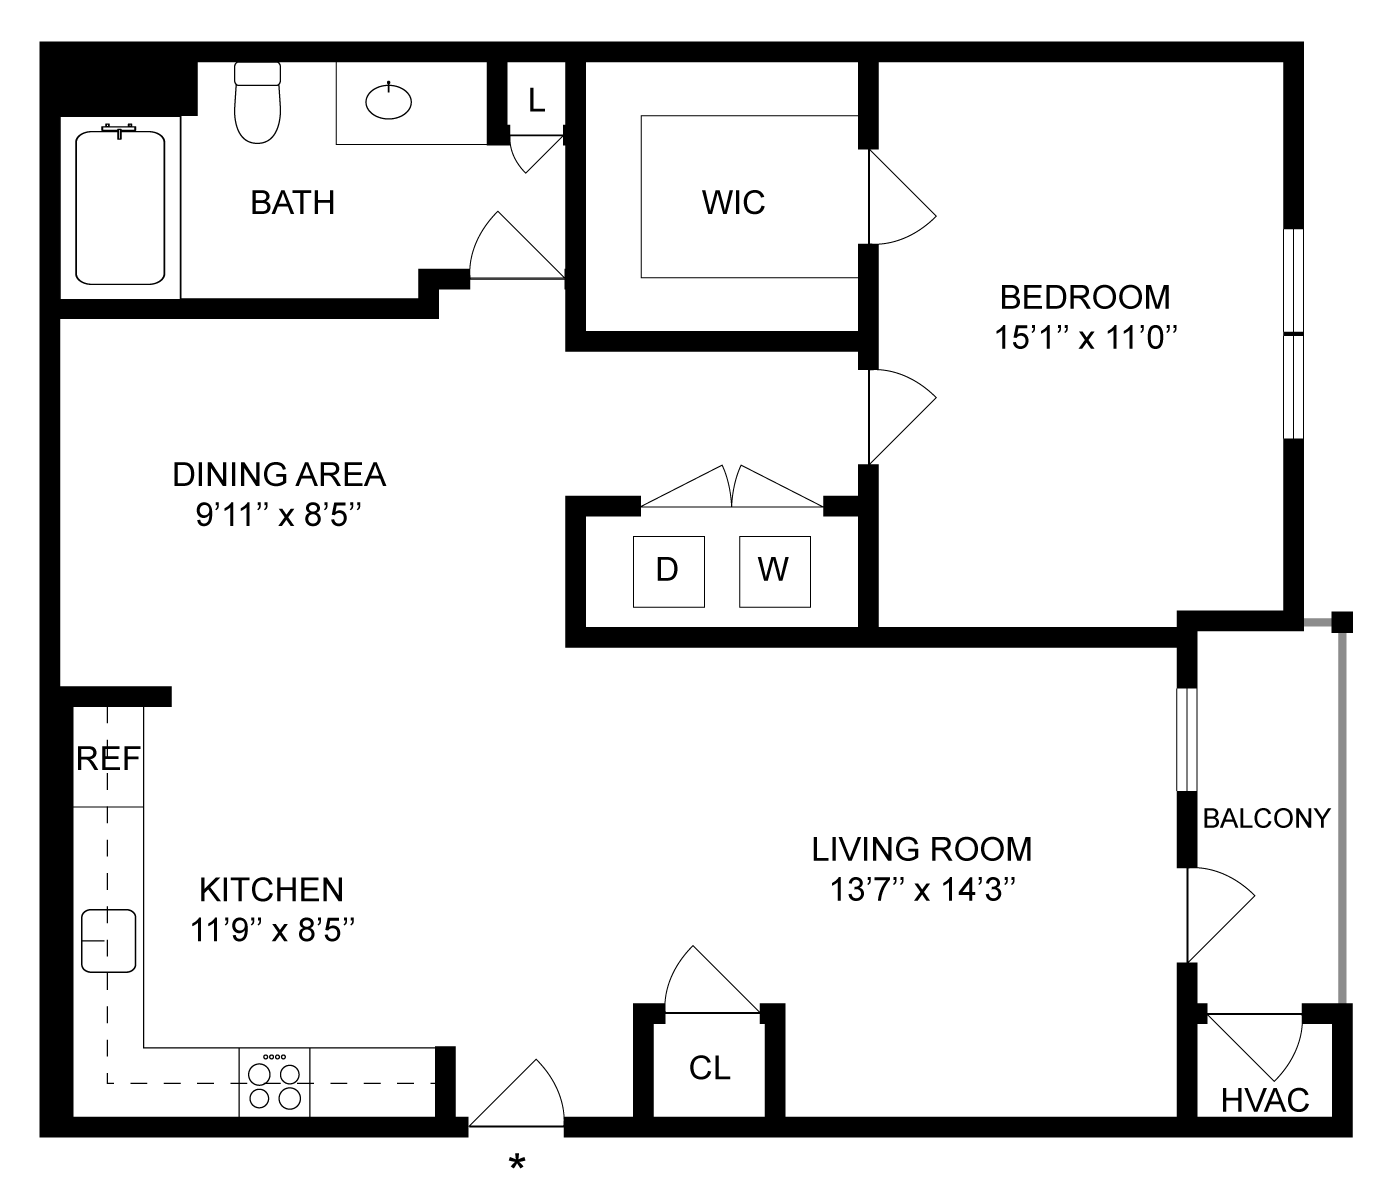 Floorplan for Apartment #02-A11, 1 bedroom unit at Halstead Hopkinton